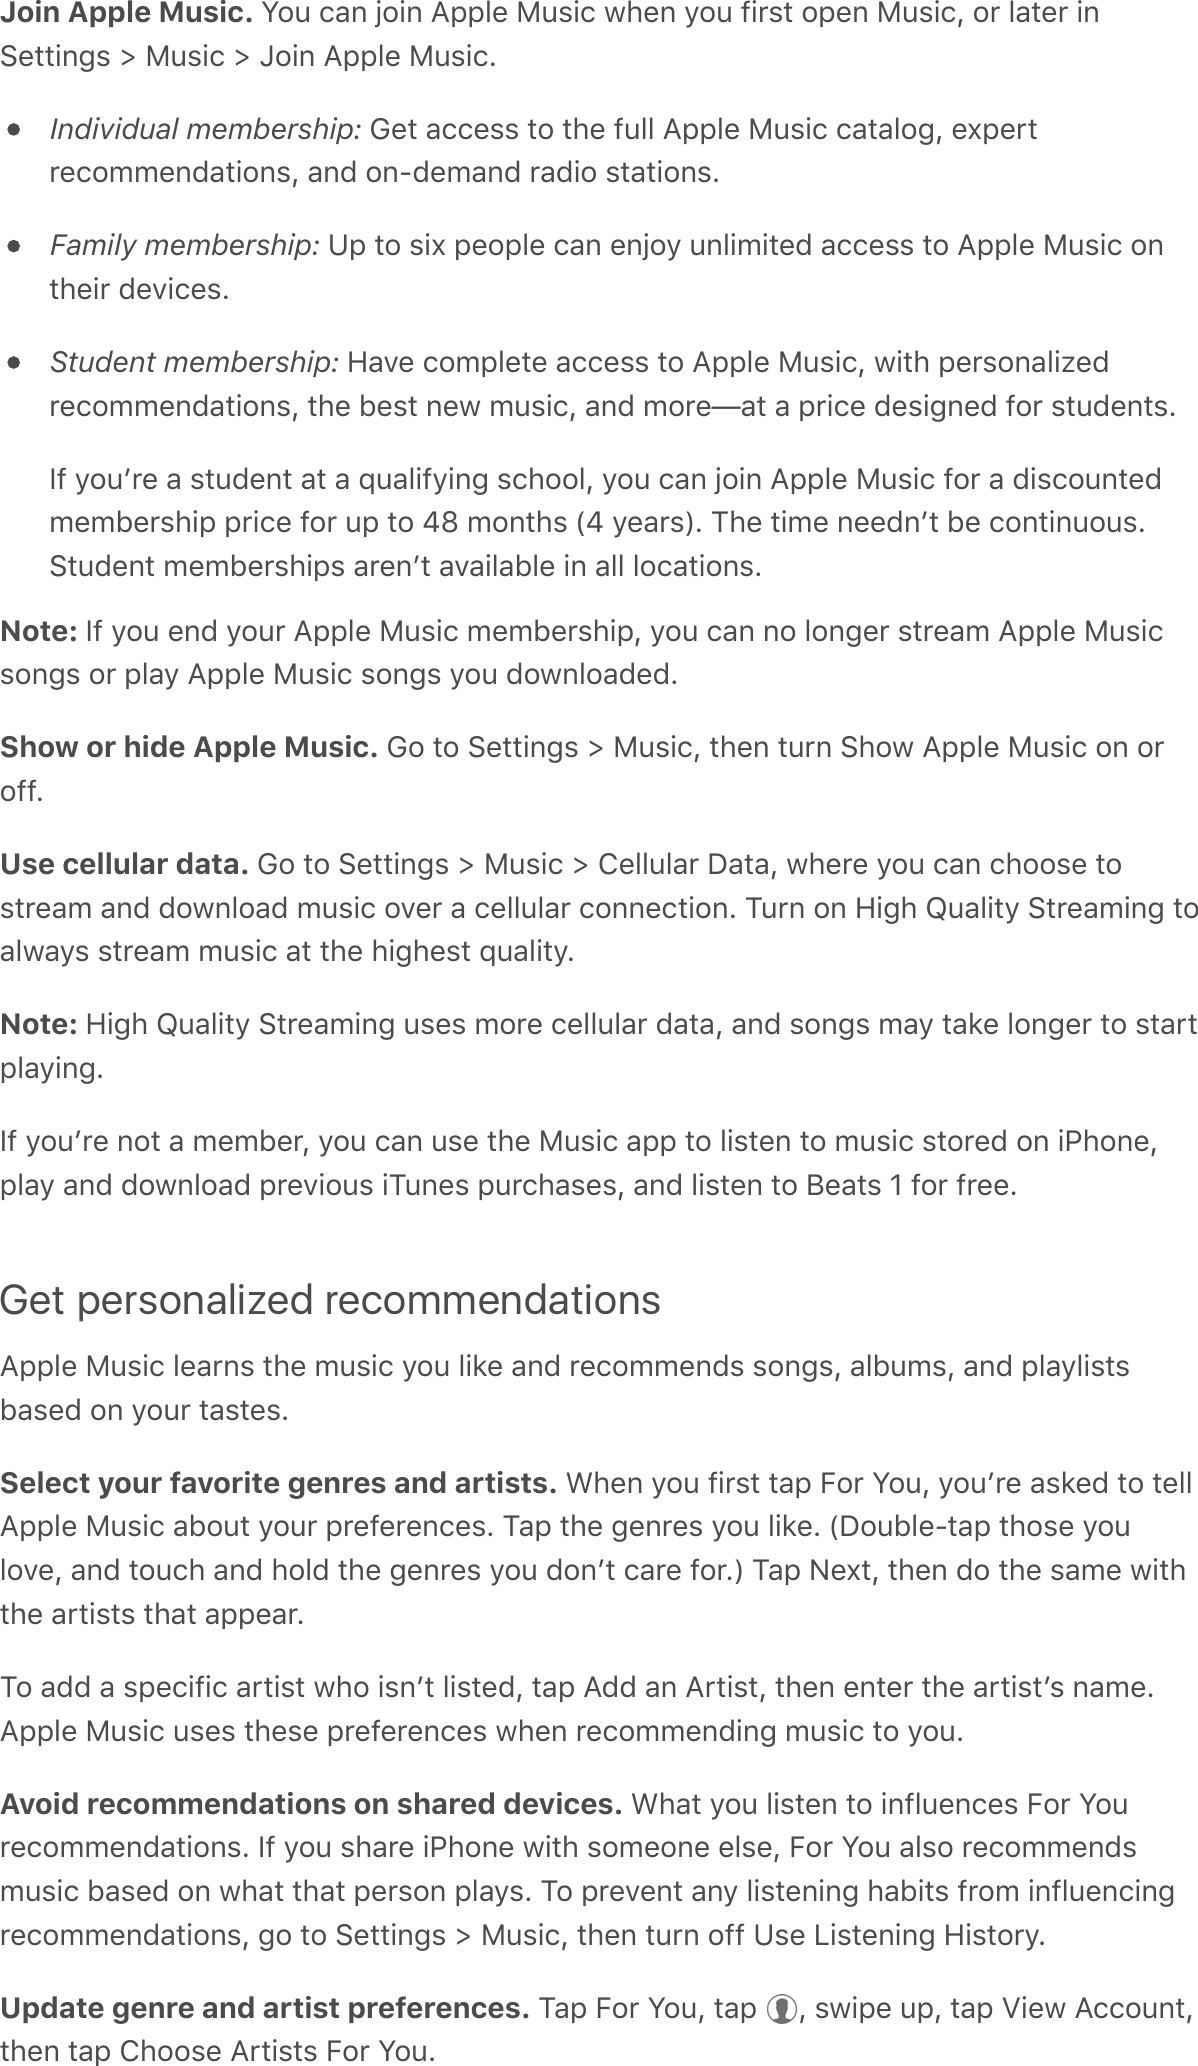 Join Apple Music. S$6&apos;/-%&apos;_$!%&apos;B;;.&amp;&apos;H6,!/&apos;3#&amp;%&apos;&gt;$6&apos;7!0,*&apos;$;&amp;%&apos;H6,!/Q&apos;$0&apos;.-*&amp;0&apos;!%:&amp;**!%4,&apos;e&apos;H6,!/&apos;e&apos;a$!%&apos;B;;.&amp;&apos;H6,!/GIndividual membership: M&amp;*&apos;-//&amp;,,&apos;*$&apos;*#&amp;&apos;76..&apos;B;;.&amp;&apos;H6,!/&apos;/-*-.$4Q&apos;&amp;^;&amp;0*0&amp;/$99&amp;%C-*!$%,Q&apos;-%C&apos;$%8C&amp;9-%C&apos;0-C!$&apos;,*-*!$%,GFamily membership: 1;&apos;*$&apos;,!^&apos;;&amp;$;.&amp;&apos;/-%&apos;&amp;%_$&gt;&apos;6%.!9!*&amp;C&apos;-//&amp;,,&apos;*$&apos;B;;.&amp;&apos;H6,!/&apos;$%*#&amp;!0&apos;C&amp;A!/&amp;,GStudent membership: `-A&amp;&apos;/$9;.&amp;*&amp;&apos;-//&amp;,,&apos;*$&apos;B;;.&amp;&apos;H6,!/Q&apos;3!*#&apos;;&amp;0,$%-.!@&amp;C0&amp;/$99&amp;%C-*!$%,Q&apos;*#&amp;&apos;F&amp;,*&apos;%&amp;3&apos;96,!/Q&apos;-%C&apos;9$0&amp;g-*&apos;-&apos;;0!/&amp;&apos;C&amp;,!4%&amp;C&apos;7$0&apos;,*6C&amp;%*,G)7&apos;&gt;$6+0&amp;&apos;-&apos;,*6C&amp;%*&apos;-*&apos;-&apos;d6-.!7&gt;!%4&apos;,/#$$.Q&apos;&gt;$6&apos;/-%&apos;_$!%&apos;B;;.&amp;&apos;H6,!/&apos;7$0&apos;-&apos;C!,/$6%*&amp;C9&amp;9F&amp;0,#!;&apos;;0!/&amp;&apos;7$0&apos;6;&apos;*$&apos;lU&apos;9$%*#,&apos;\l&apos;&gt;&amp;-0,]G&apos;?#&amp;&apos;*!9&amp;&apos;%&amp;&amp;C%+*&apos;F&amp;&apos;/$%*!%6$6,G:*6C&amp;%*&apos;9&amp;9F&amp;0,#!;,&apos;-0&amp;%+*&apos;-A-!.-F.&amp;&apos;!%&apos;-..&apos;.$/-*!$%,GNote: )7&apos;&gt;$6&apos;&amp;%C&apos;&gt;$60&apos;B;;.&amp;&apos;H6,!/&apos;9&amp;9F&amp;0,#!;Q&apos;&gt;$6&apos;/-%&apos;%$&apos;.$%4&amp;0&apos;,*0&amp;-9&apos;B;;.&amp;&apos;H6,!/,$%4,&apos;$0&apos;;.-&gt;&apos;B;;.&amp;&apos;H6,!/&apos;,$%4,&apos;&gt;$6&apos;C$3%.$-C&amp;CGShow or hide Apple Music. M$&apos;*$&apos;:&amp;**!%4,&apos;e&apos;H6,!/Q&apos;*#&amp;%&apos;*60%&apos;:#$3&apos;B;;.&amp;&apos;H6,!/&apos;$%&apos;$0$77GUse cellular data. M$&apos;*$&apos;:&amp;**!%4,&apos;e&apos;H6,!/&apos;e&apos;T&amp;..6.-0&apos;&lt;-*-Q&apos;3#&amp;0&amp;&apos;&gt;$6&apos;/-%&apos;/#$$,&amp;&apos;*$,*0&amp;-9&apos;-%C&apos;C$3%.$-C&apos;96,!/&apos;$A&amp;0&apos;-&apos;/&amp;..6.-0&apos;/$%%&amp;/*!$%G&apos;?60%&apos;$%&apos;`!4#&apos;K6-.!*&gt;&apos;:*0&amp;-9!%4&apos;*$-.3-&gt;,&apos;,*0&amp;-9&apos;96,!/&apos;-*&apos;*#&amp;&apos;#!4#&amp;,*&apos;d6-.!*&gt;GNote: `!4#&apos;K6-.!*&gt;&apos;:*0&amp;-9!%4&apos;6,&amp;,&apos;9$0&amp;&apos;/&amp;..6.-0&apos;C-*-Q&apos;-%C&apos;,$%4,&apos;9-&gt;&apos;*-2&amp;&apos;.$%4&amp;0&apos;*$&apos;,*-0*;.-&gt;!%4G)7&apos;&gt;$6+0&amp;&apos;%$*&apos;-&apos;9&amp;9F&amp;0Q&apos;&gt;$6&apos;/-%&apos;6,&amp;&apos;*#&amp;&apos;H6,!/&apos;-;;&apos;*$&apos;.!,*&amp;%&apos;*$&apos;96,!/&apos;,*$0&amp;C&apos;$%&apos;!&quot;#$%&amp;Q;.-&gt;&apos;-%C&apos;C$3%.$-C&apos;;0&amp;A!$6,&apos;!?6%&amp;,&apos;;60/#-,&amp;,Q&apos;-%C&apos;.!,*&amp;%&apos;*$&apos;P&amp;-*,&apos;O&apos;7$0&apos;70&amp;&amp;GGet personalized recommendationsB;;.&amp;&apos;H6,!/&apos;.&amp;-0%,&apos;*#&amp;&apos;96,!/&apos;&gt;$6&apos;.!2&amp;&apos;-%C&apos;0&amp;/$99&amp;%C,&apos;,$%4,Q&apos;-.F69,Q&apos;-%C&apos;;.-&gt;.!,*,F-,&amp;C&apos;$%&apos;&gt;$60&apos;*-,*&amp;,GSelect your favorite genres and artists. L#&amp;%&apos;&gt;$6&apos;7!0,*&apos;*-;&apos;5$0&apos;S$6Q&apos;&gt;$6+0&amp;&apos;-,2&amp;C&apos;*$&apos;*&amp;..B;;.&amp;&apos;H6,!/&apos;-F$6*&apos;&gt;$60&apos;;0&amp;7&amp;0&amp;%/&amp;,G&apos;?-;&apos;*#&amp;&apos;4&amp;%0&amp;,&apos;&gt;$6&apos;.!2&amp;G&apos;\&lt;$6F.&amp;8*-;&apos;*#$,&amp;&apos;&gt;$6.$A&amp;Q&apos;-%C&apos;*$6/#&apos;-%C&apos;#$.C&apos;*#&amp;&apos;4&amp;%0&amp;,&apos;&gt;$6&apos;C$%+*&apos;/-0&amp;&apos;7$0G]&apos;?-;&apos;E&amp;^*Q&apos;*#&amp;%&apos;C$&apos;*#&amp;&apos;,-9&amp;&apos;3!*#*#&amp;&apos;-0*!,*,&apos;*#-*&apos;-;;&amp;-0G?$&apos;-CC&apos;-&apos;,;&amp;/!7!/&apos;-0*!,*&apos;3#$&apos;!,%+*&apos;.!,*&amp;CQ&apos;*-;&apos;BCC&apos;-%&apos;B0*!,*Q&apos;*#&amp;%&apos;&amp;%*&amp;0&apos;*#&amp;&apos;-0*!,*+,&apos;%-9&amp;GB;;.&amp;&apos;H6,!/&apos;6,&amp;,&apos;*#&amp;,&amp;&apos;;0&amp;7&amp;0&amp;%/&amp;,&apos;3#&amp;%&apos;0&amp;/$99&amp;%C!%4&apos;96,!/&apos;*$&apos;&gt;$6GAvoid recommendations on shared devices. L#-*&apos;&gt;$6&apos;.!,*&amp;%&apos;*$&apos;!%7.6&amp;%/&amp;,&apos;5$0&apos;S$60&amp;/$99&amp;%C-*!$%,G&apos;)7&apos;&gt;$6&apos;,#-0&amp;&apos;!&quot;#$%&amp;&apos;3!*#&apos;,$9&amp;$%&amp;&apos;&amp;.,&amp;Q&apos;5$0&apos;S$6&apos;-.,$&apos;0&amp;/$99&amp;%C,96,!/&apos;F-,&amp;C&apos;$%&apos;3#-*&apos;*#-*&apos;;&amp;0,$%&apos;;.-&gt;,G&apos;?$&apos;;0&amp;A&amp;%*&apos;-%&gt;&apos;.!,*&amp;%!%4&apos;#-F!*,&apos;70$9&apos;!%7.6&amp;%/!%40&amp;/$99&amp;%C-*!$%,Q&apos;4$&apos;*$&apos;:&amp;**!%4,&apos;e&apos;H6,!/Q&apos;*#&amp;%&apos;*60%&apos;$77&apos;1,&amp;&apos;D!,*&amp;%!%4&apos;`!,*$0&gt;GUpdate genre and artist preferences. ?-;&apos;5$0&apos;S$6Q&apos;*-;&apos; Q&apos;,3!;&amp;&apos;6;Q&apos;*-;&apos;Z!&amp;3&apos;B//$6%*Q*#&amp;%&apos;*-;&apos;T#$$,&amp;&apos;B0*!,*,&apos;5$0&apos;S$6G